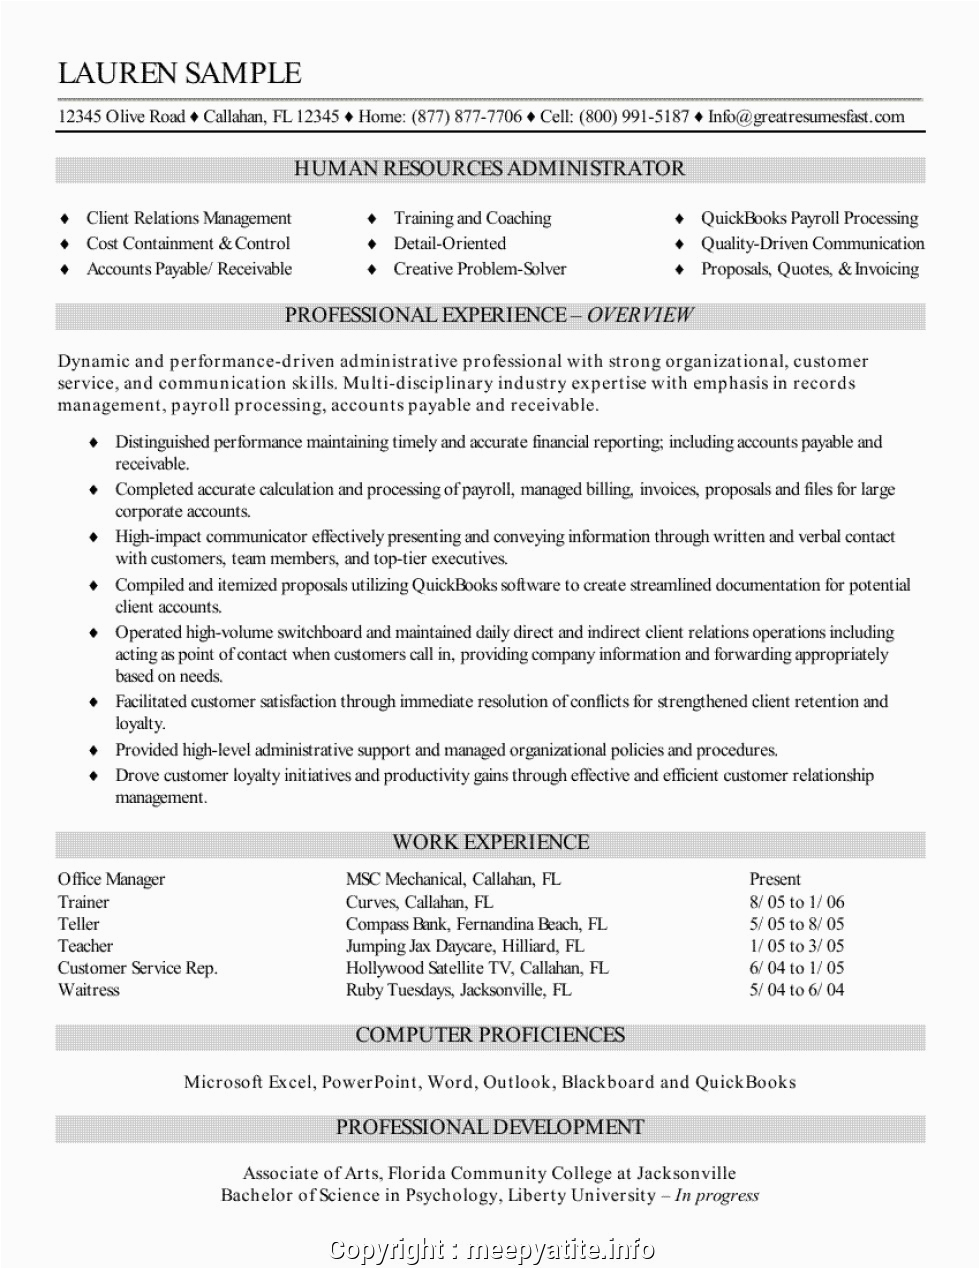 Sample Resume for Hr Recruiter Position Print Resume format for Experienced Hr Recruiter Great